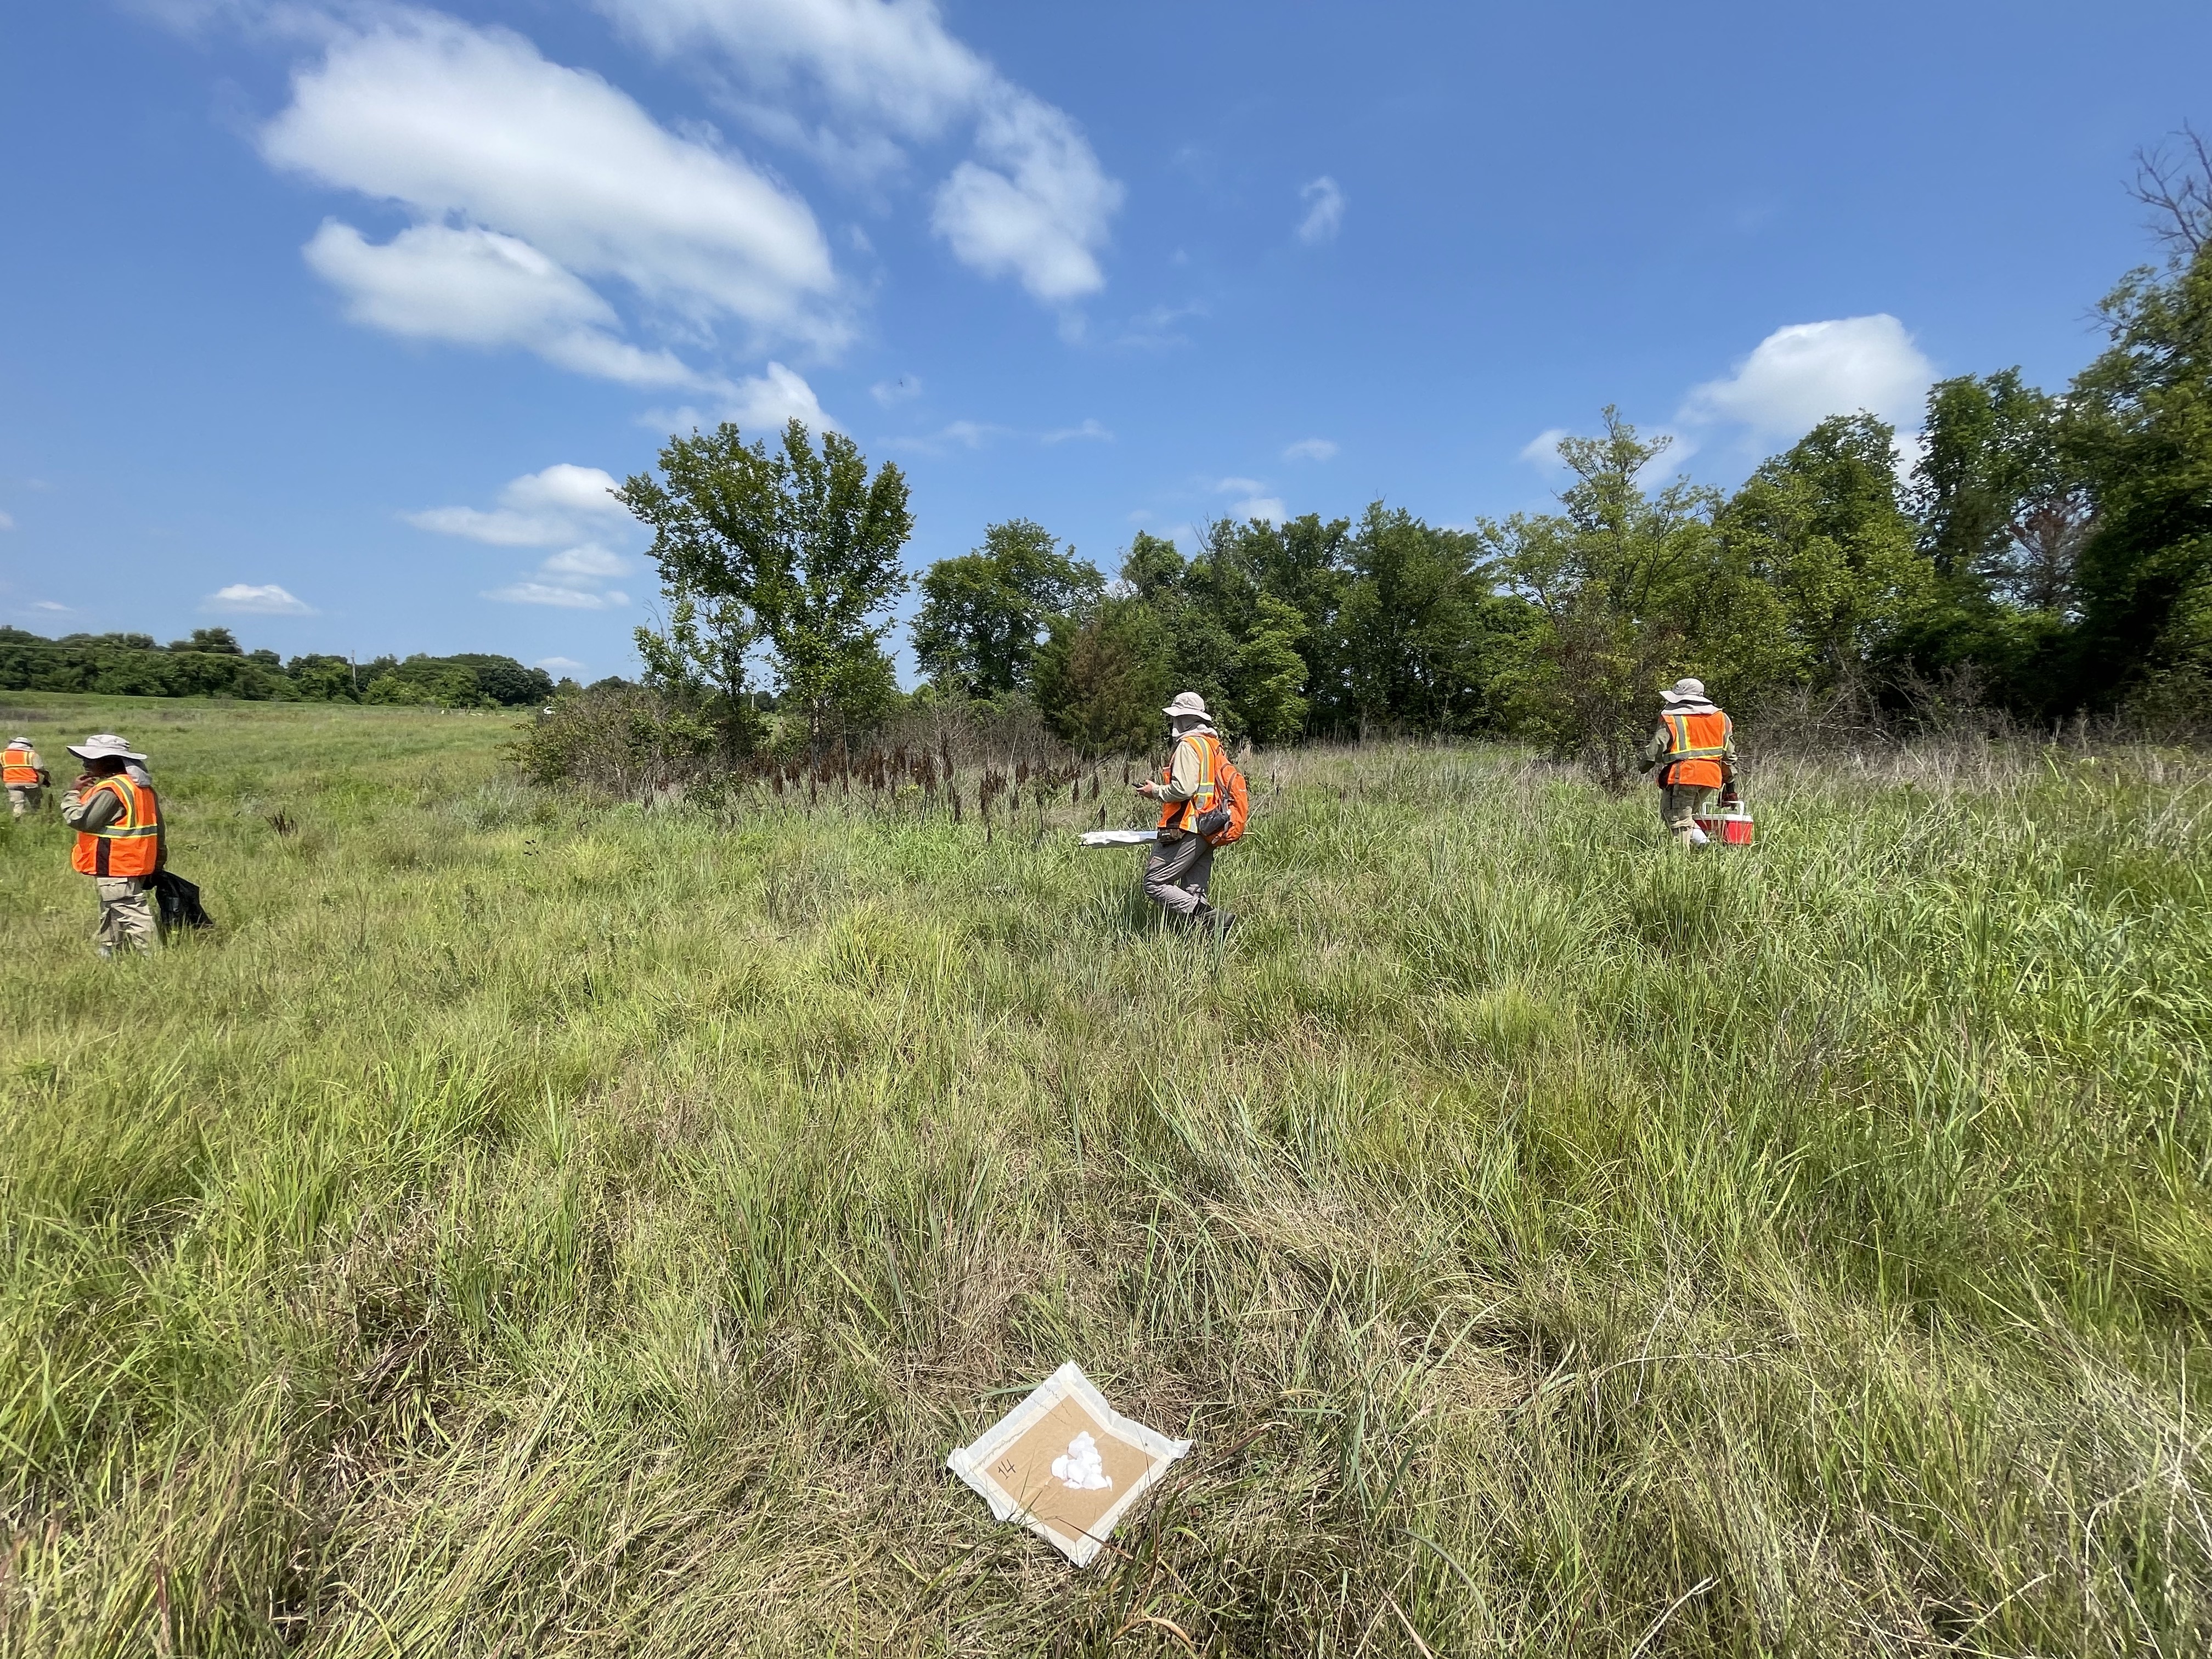 KU biologists collect ticks in a field